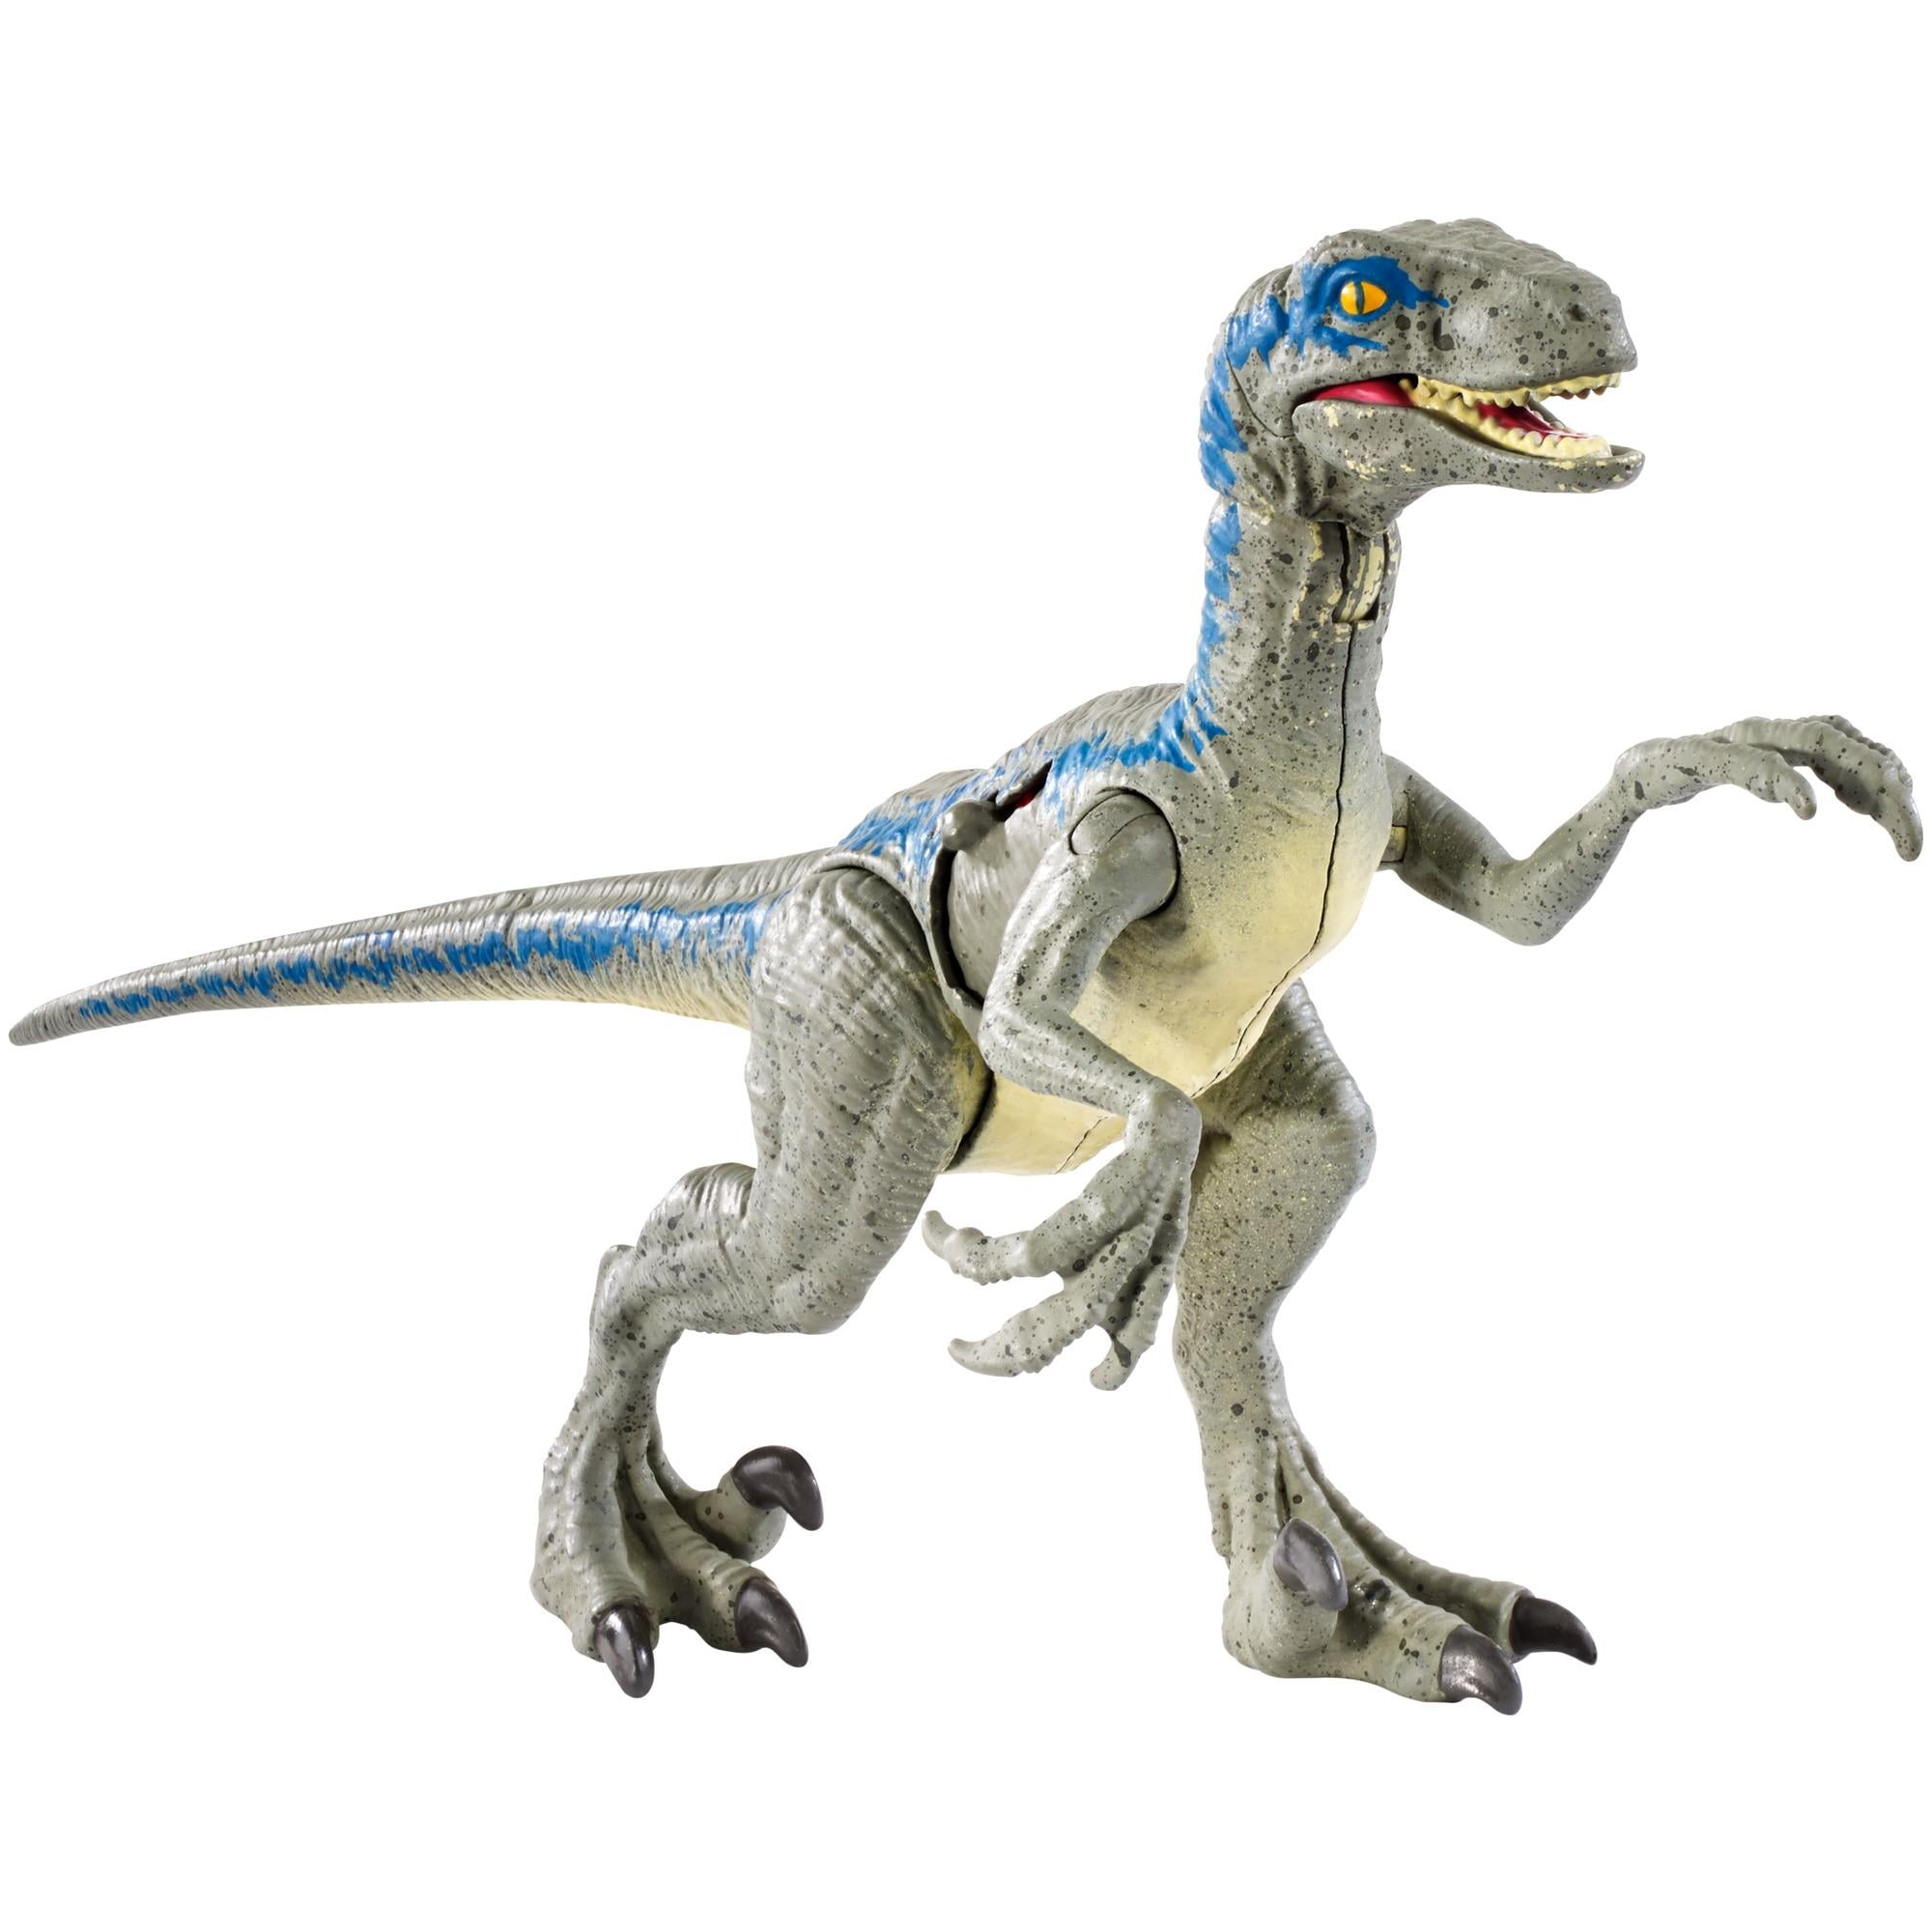 Jurassic Blue Dinosaur Velociraptor Toy Educational Birthday Model Q5D1 